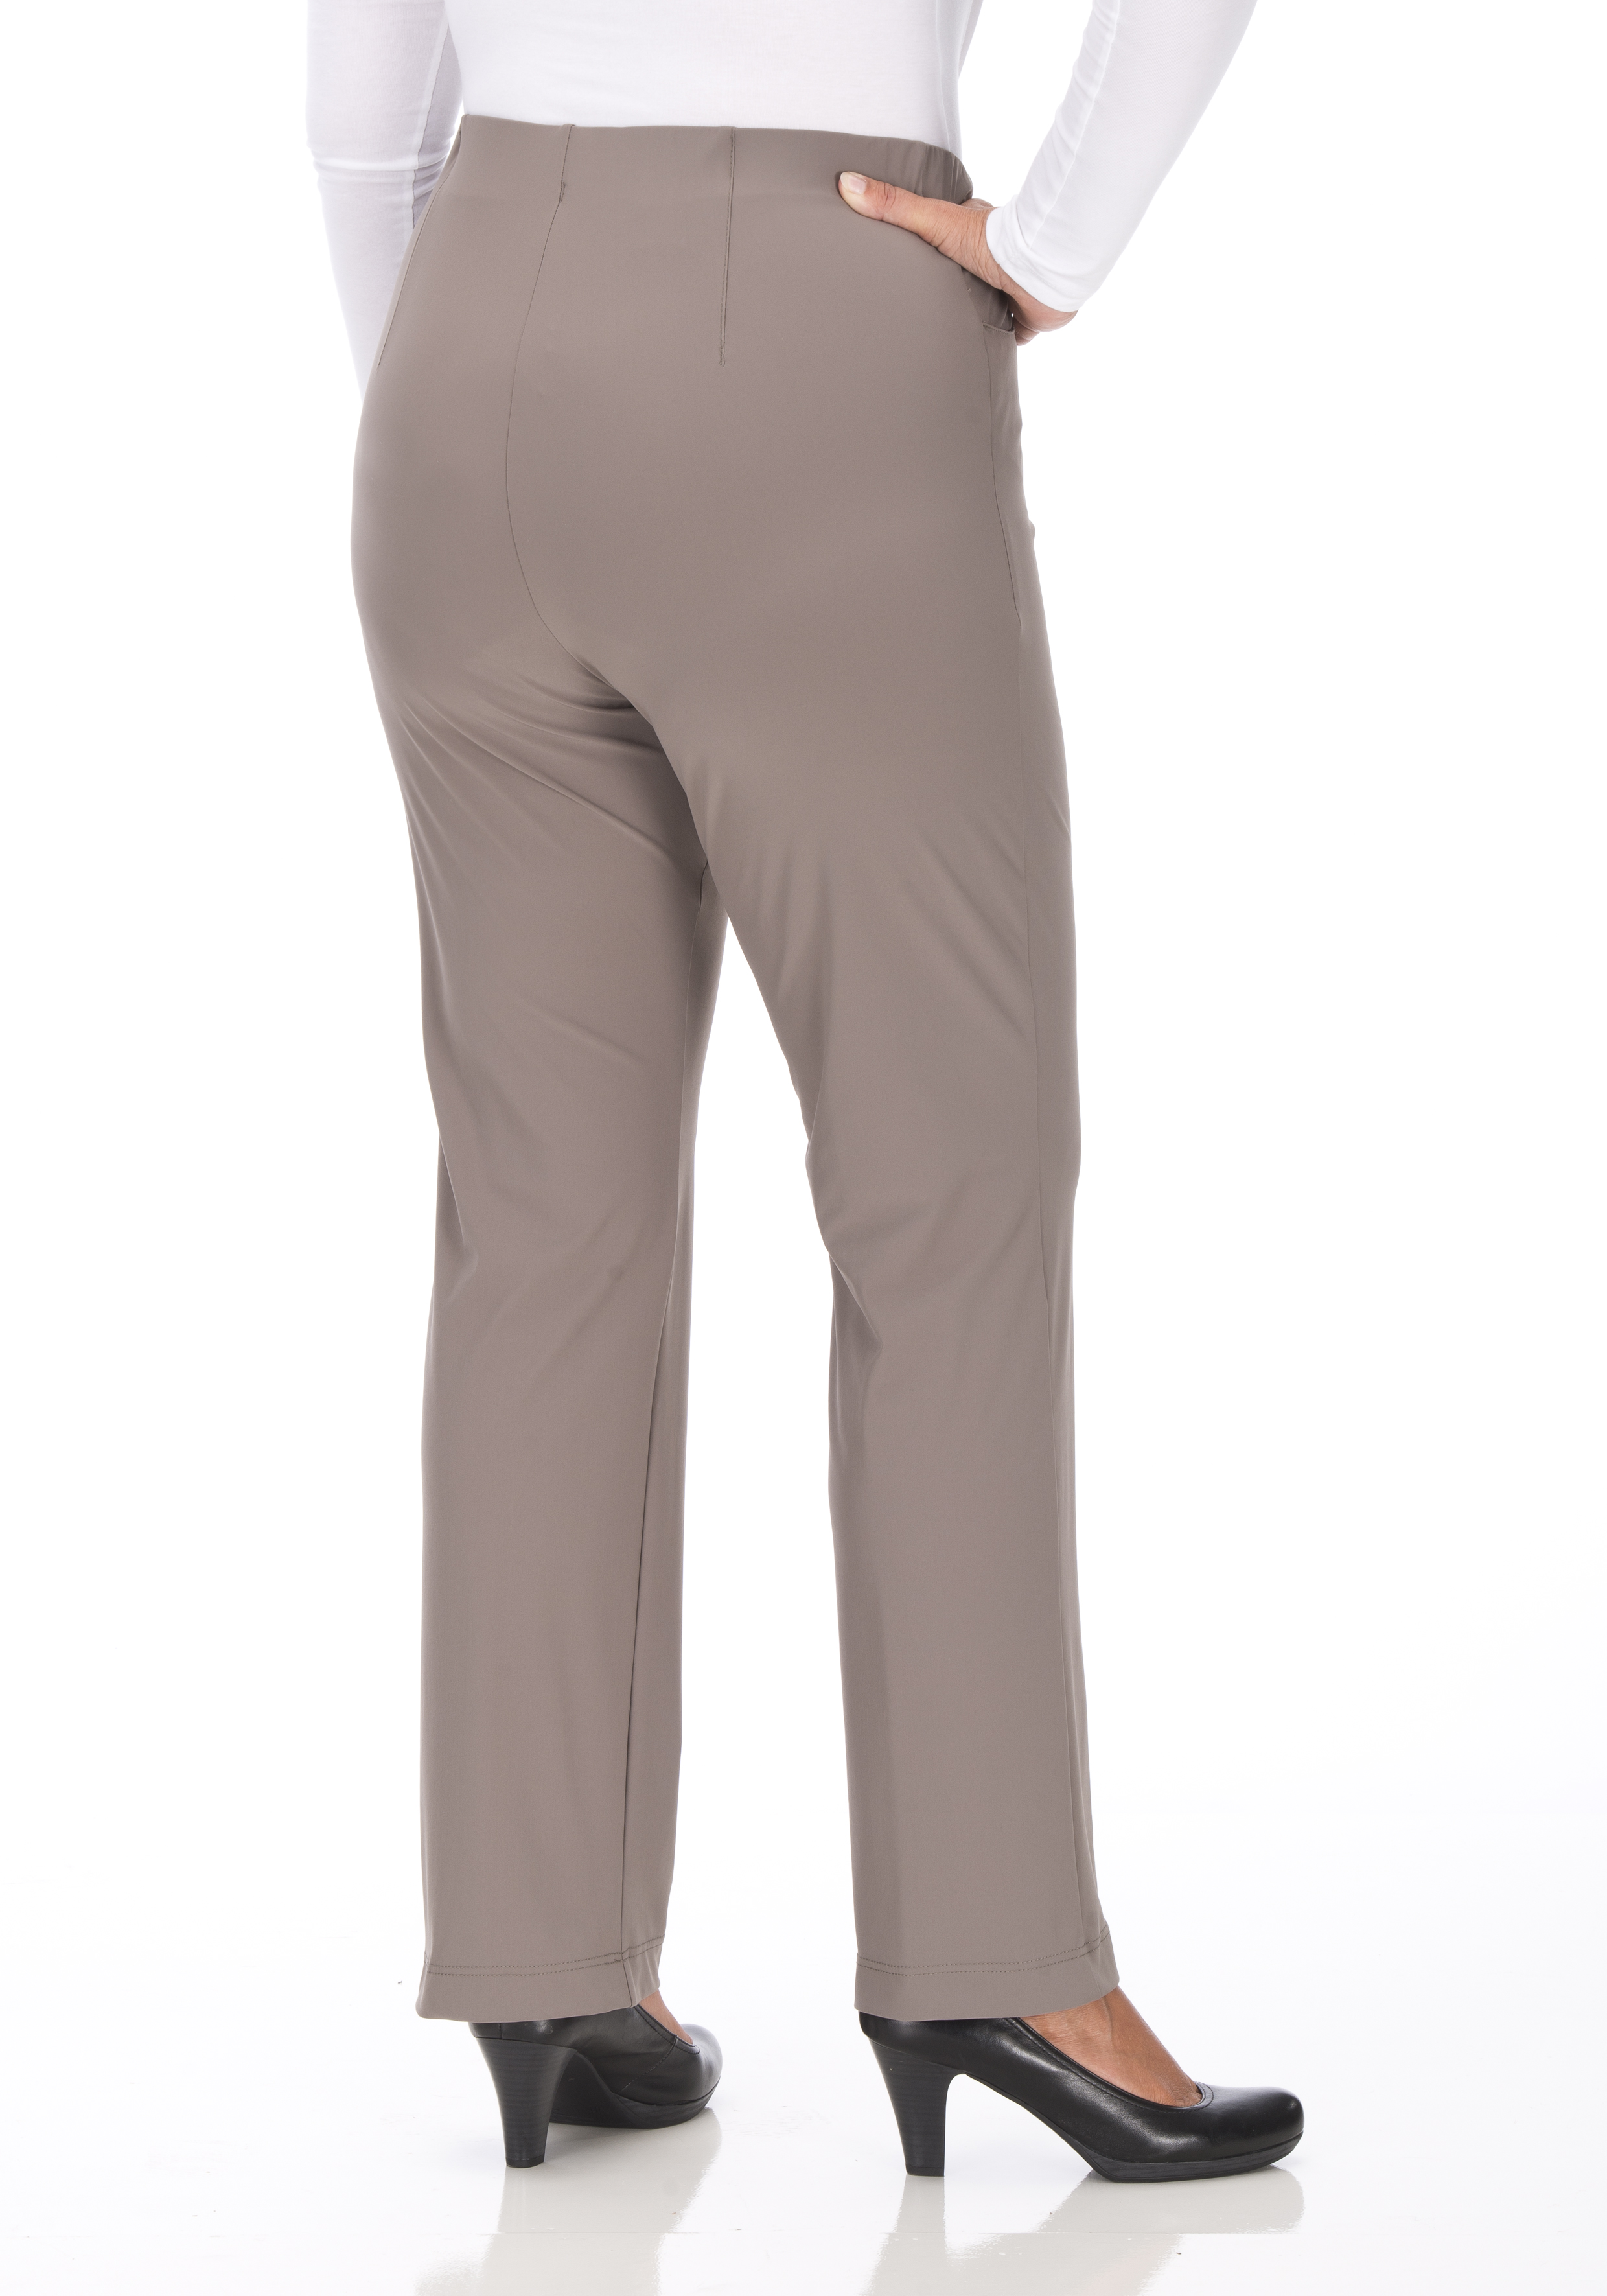 KjBRAND pants sensitive long SUSIE BiNA by Curvy - winter quality